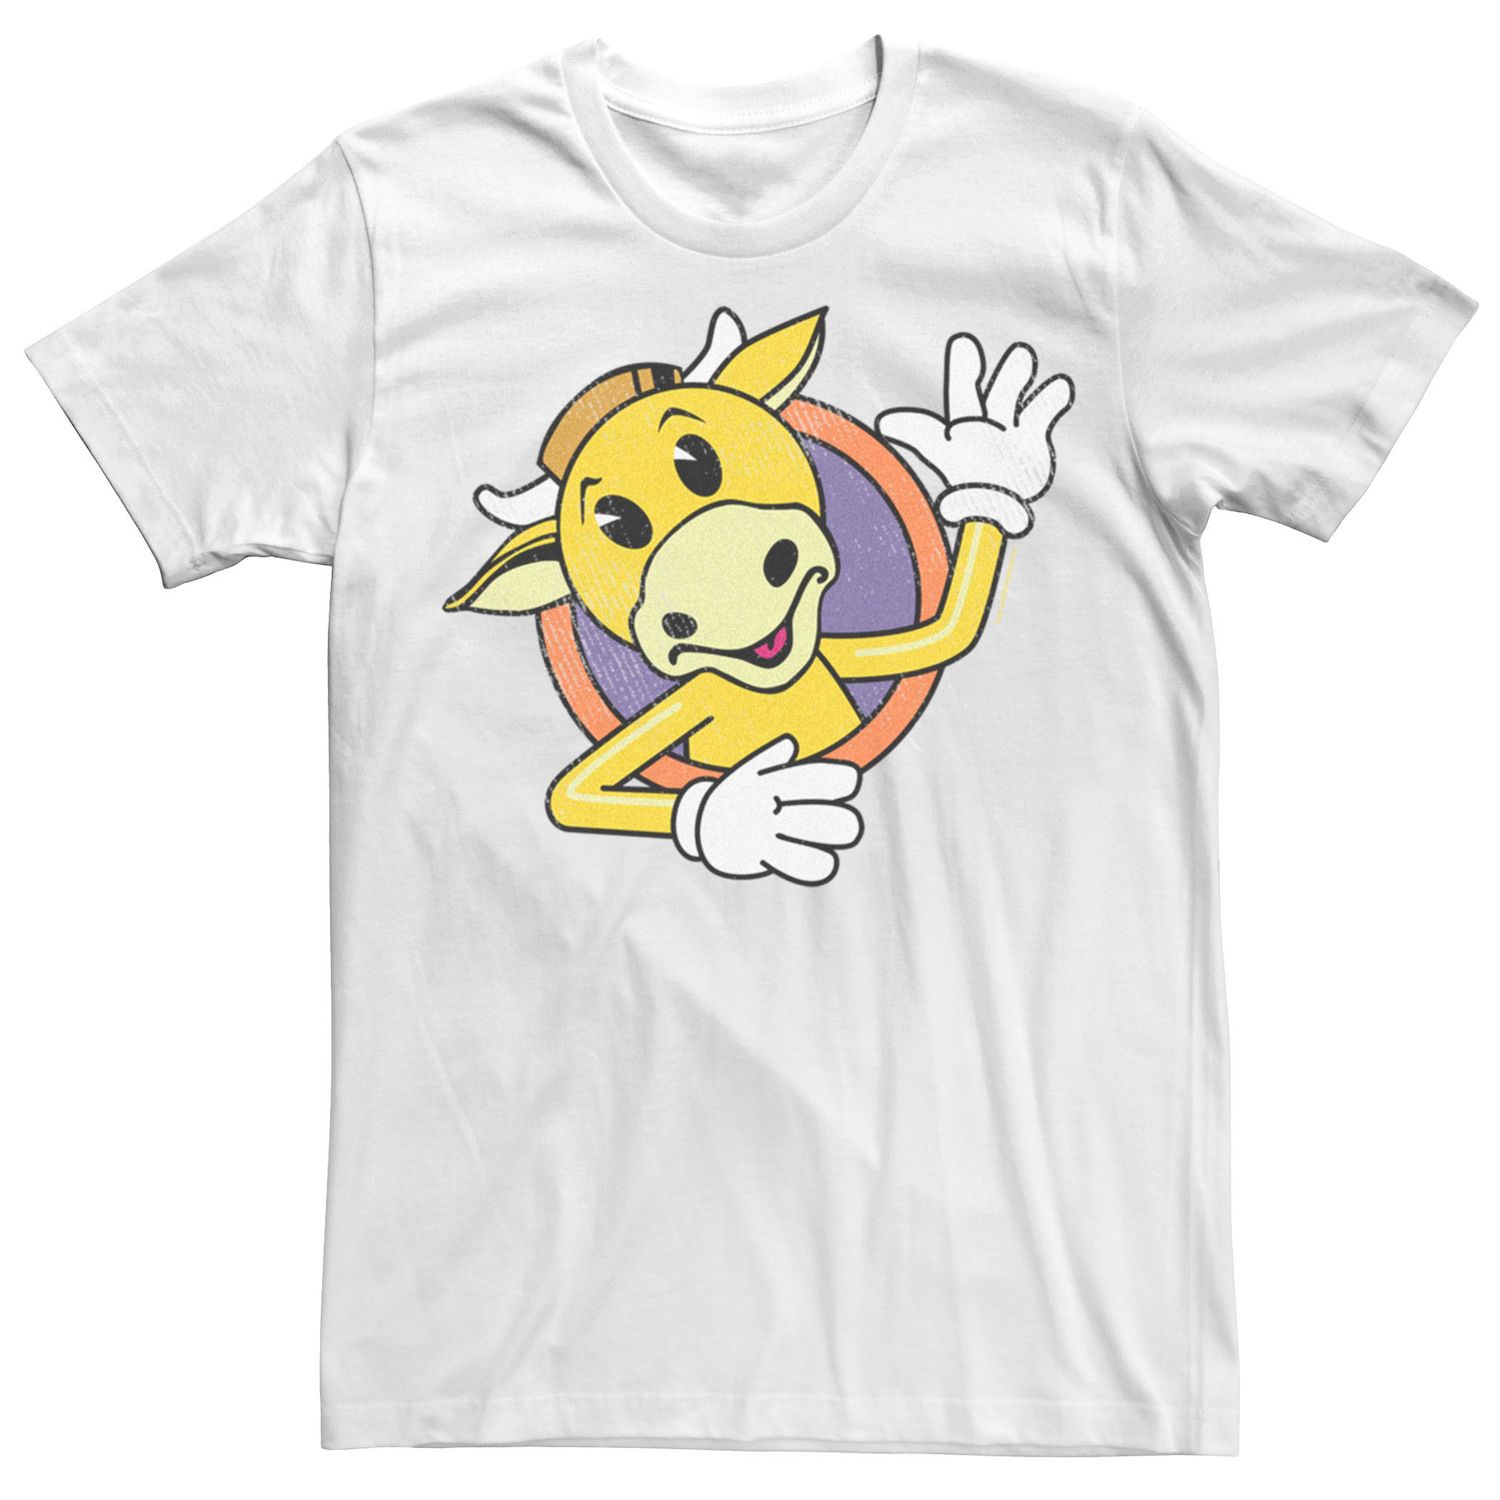 Мужская футболка с развевающимся логотипом Jay And Silent Bob Mooby's Licensed Character сумка джей и молчаливый гусь желтый